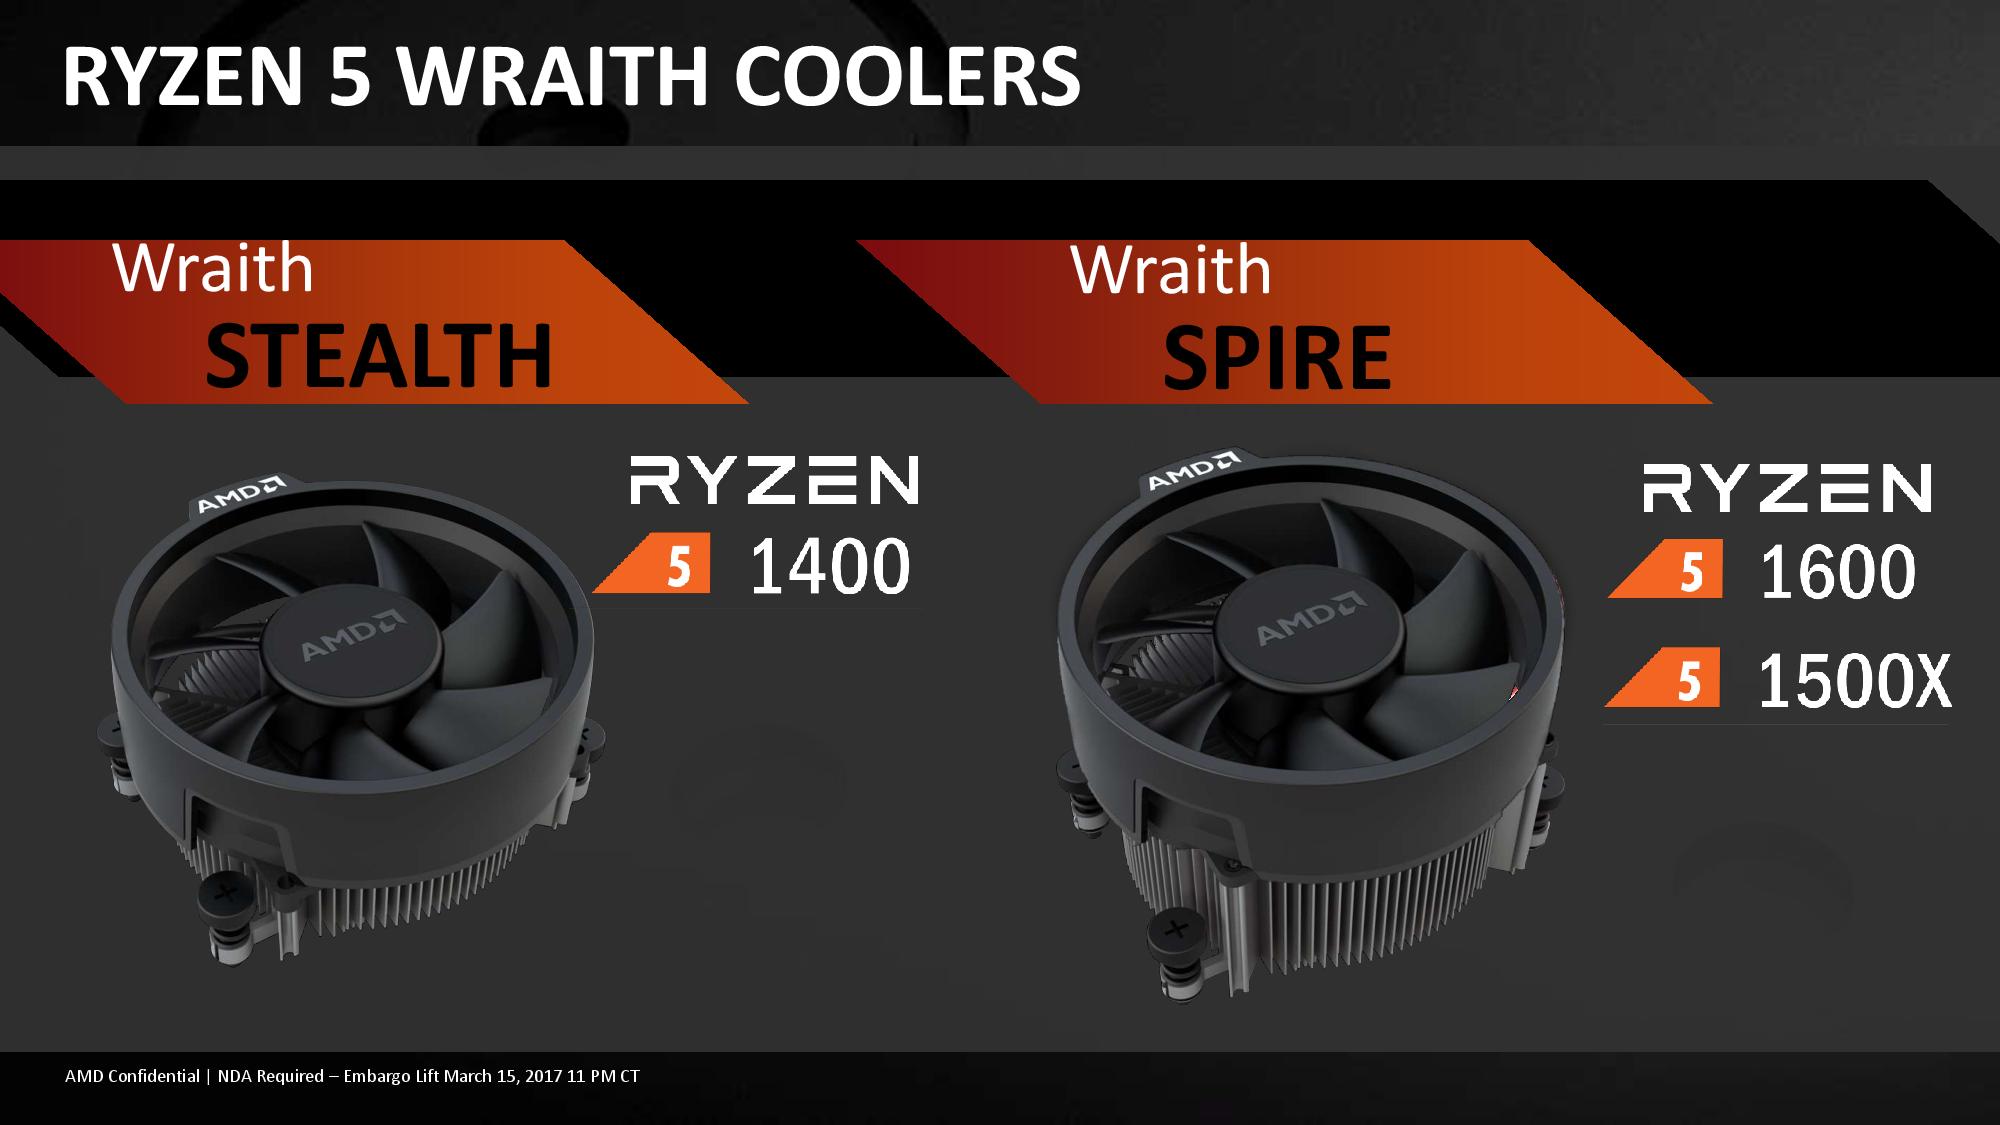 Ryzen 1600X 6c12t 3.6/4.0 GHz $249 - the gaming CPU arrives 4/11